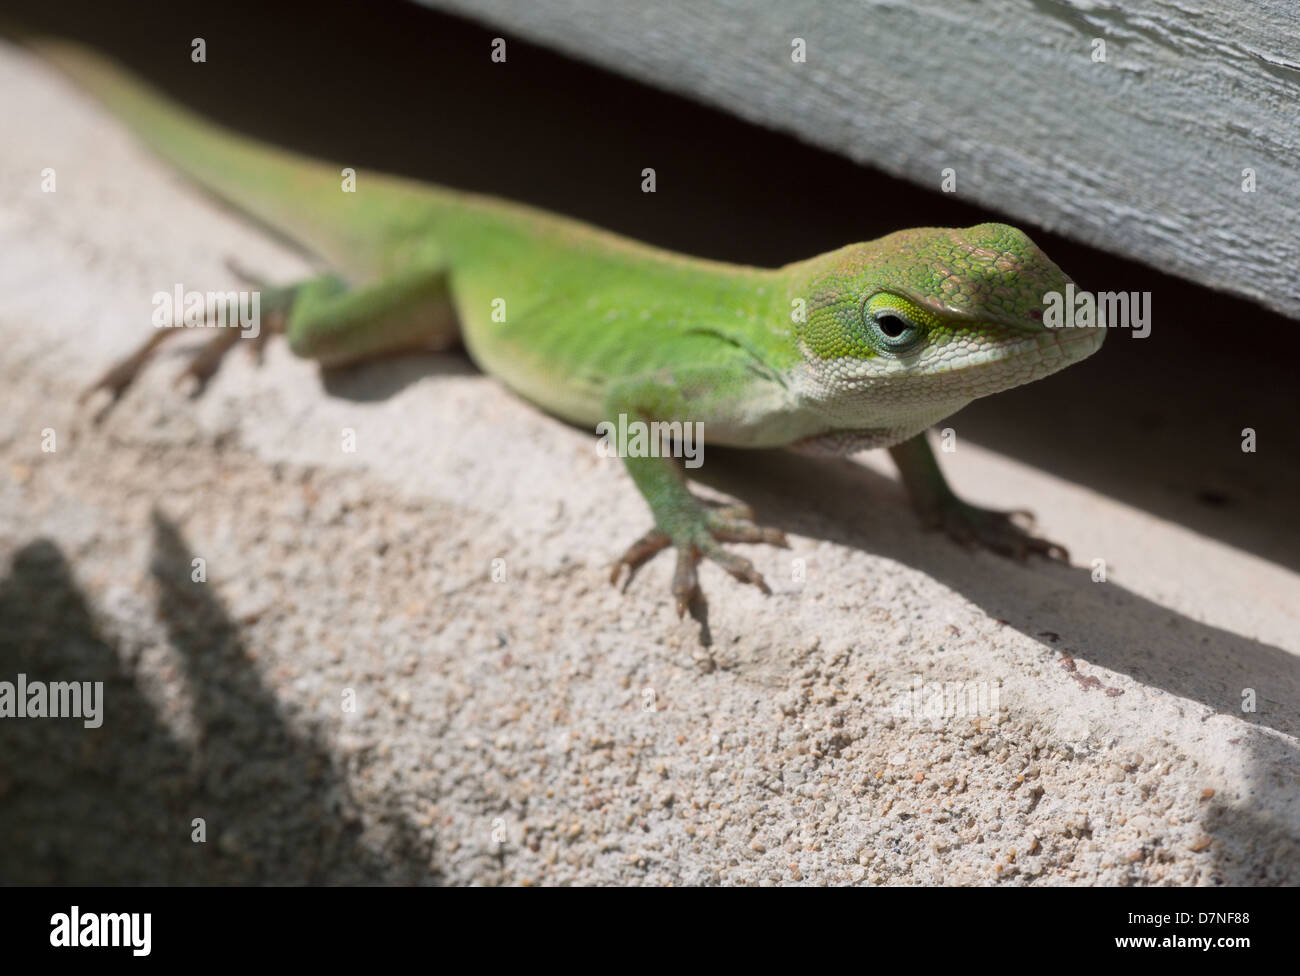 Green Anole lizard hiding under wood in the garden Stock Photo